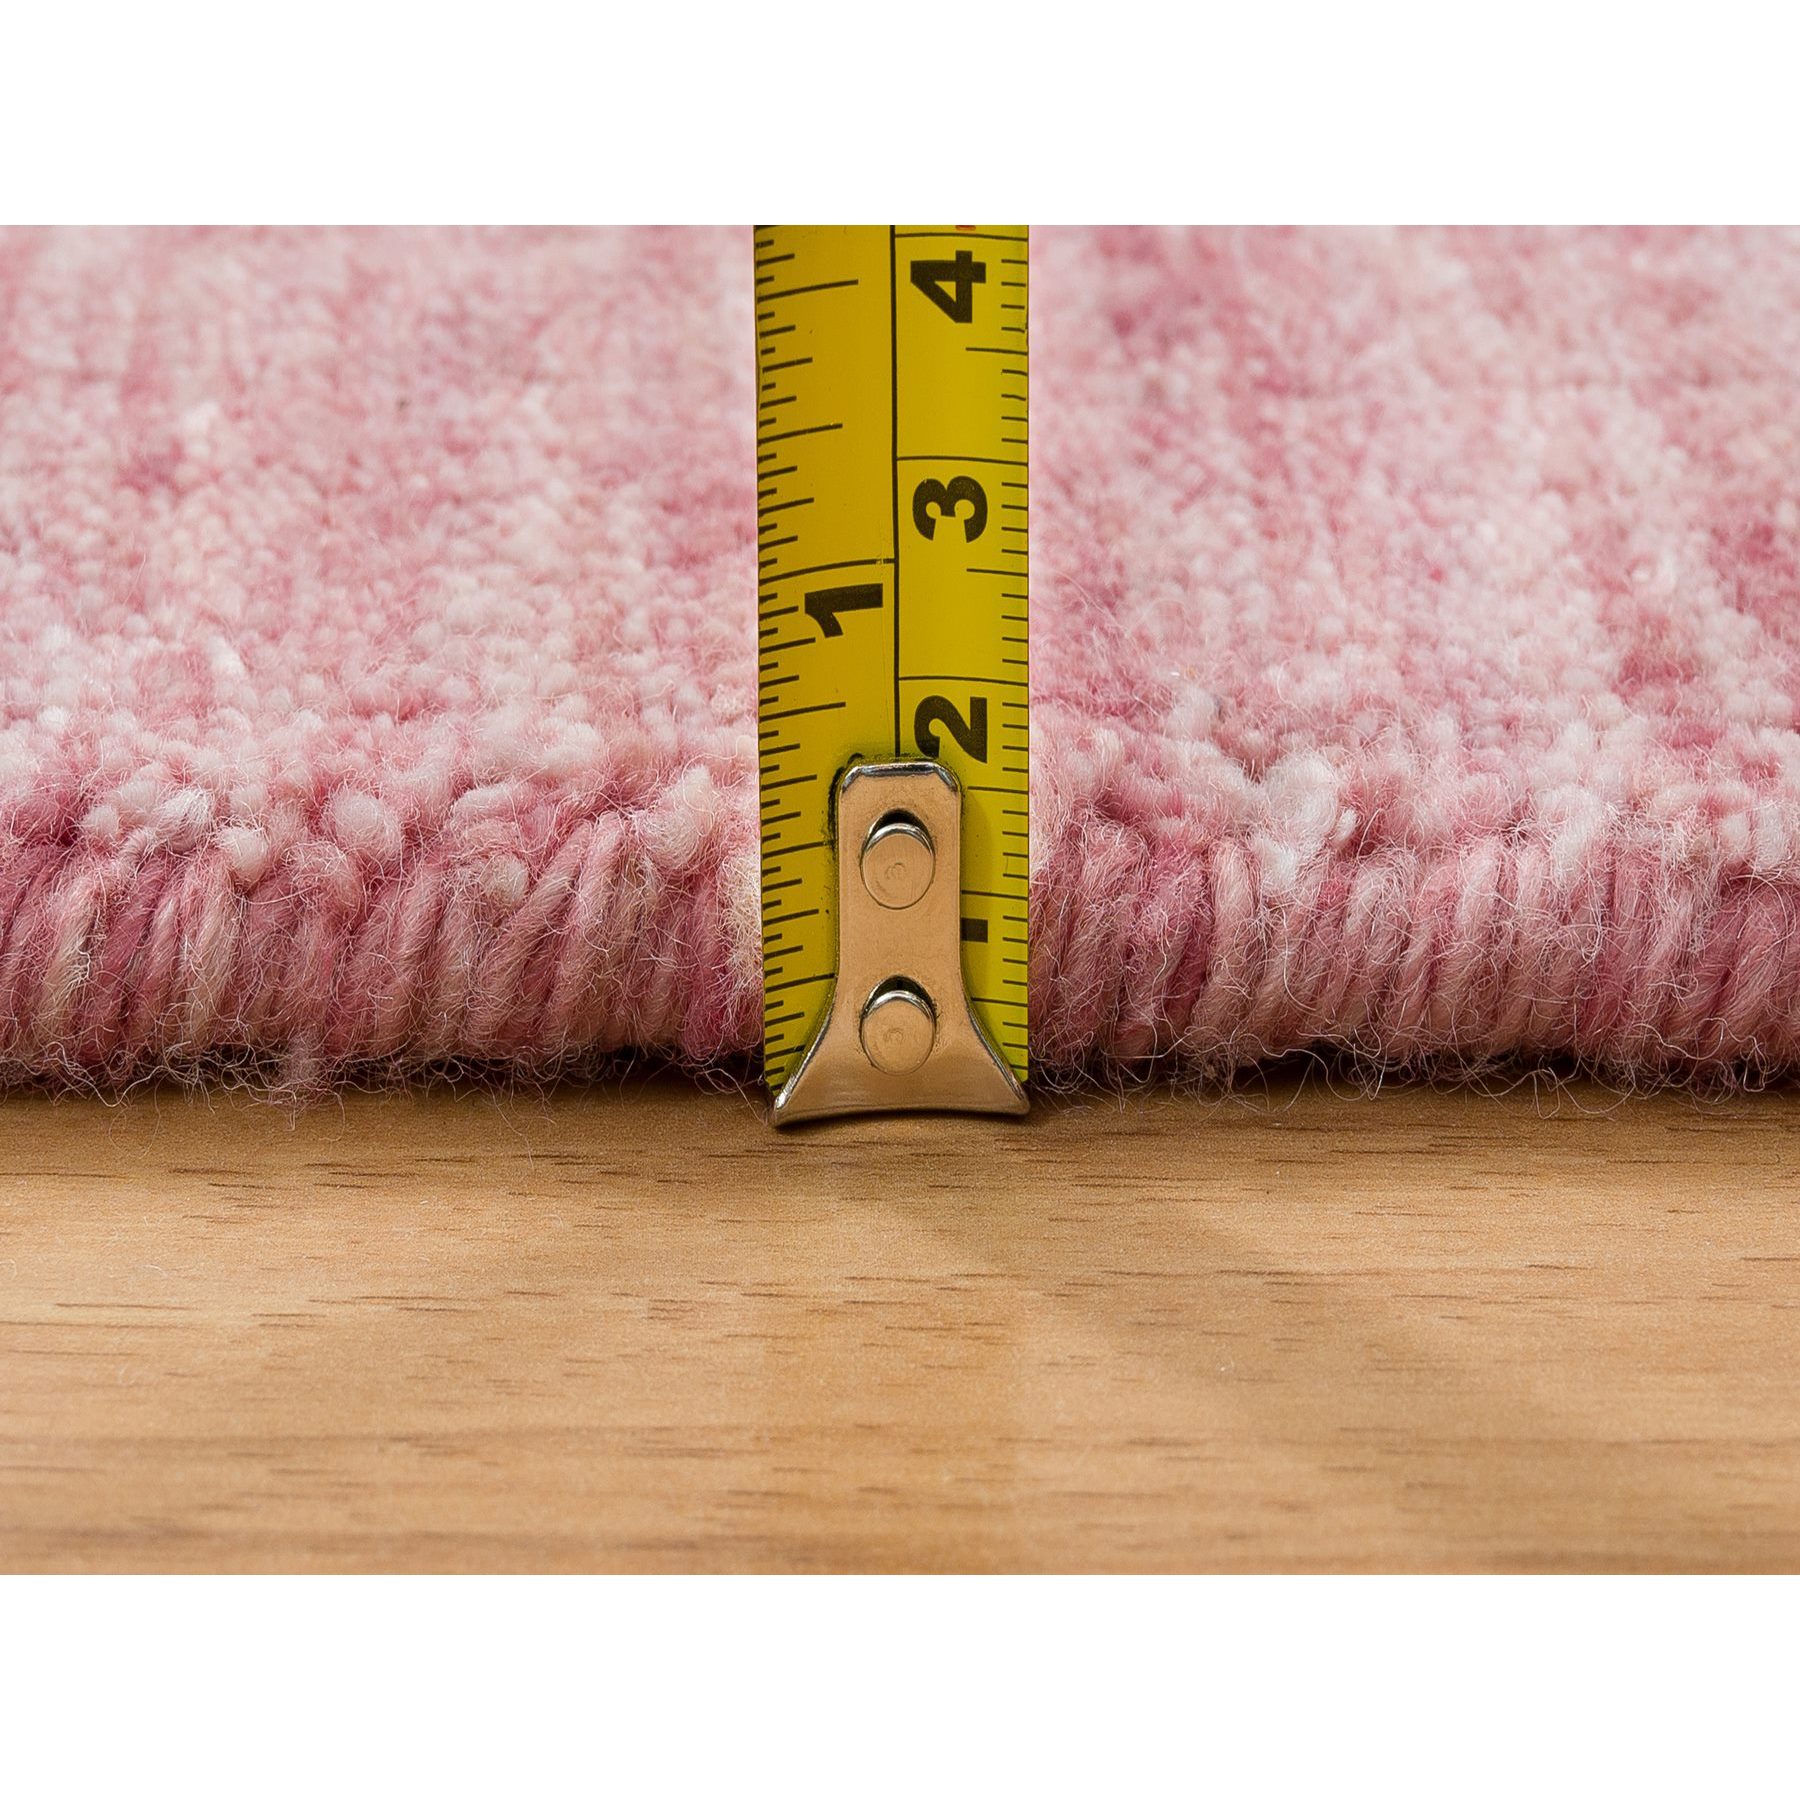 8'x10' Coral Pink, Modern Design Hand Loomed, Soft, Velvety Plush Wool, Oriental Rug 